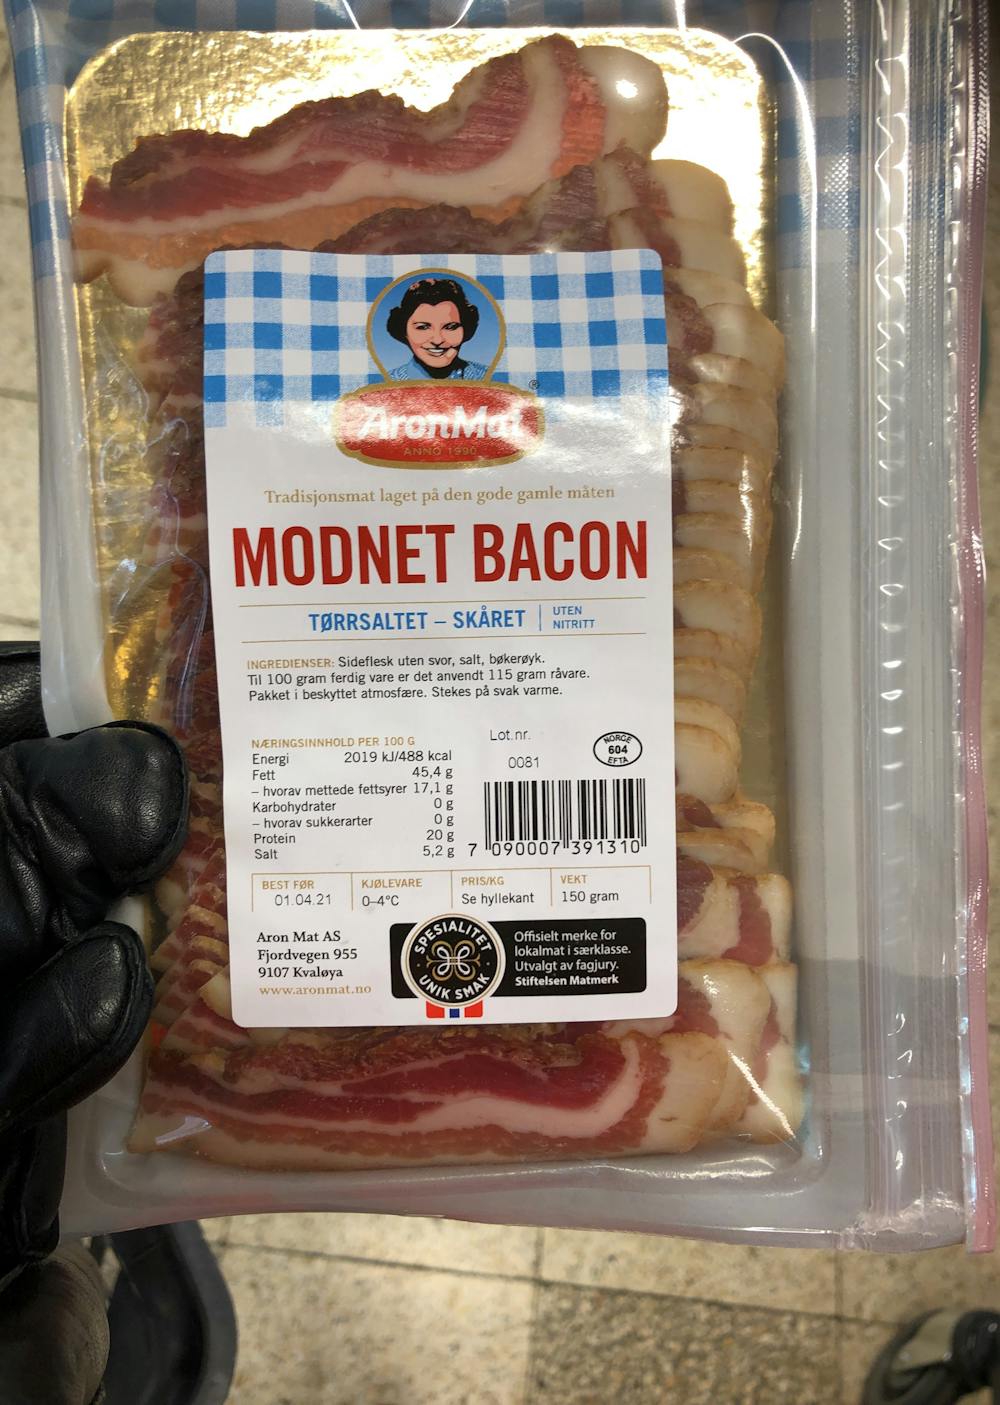 Modnet bacon, AronMat